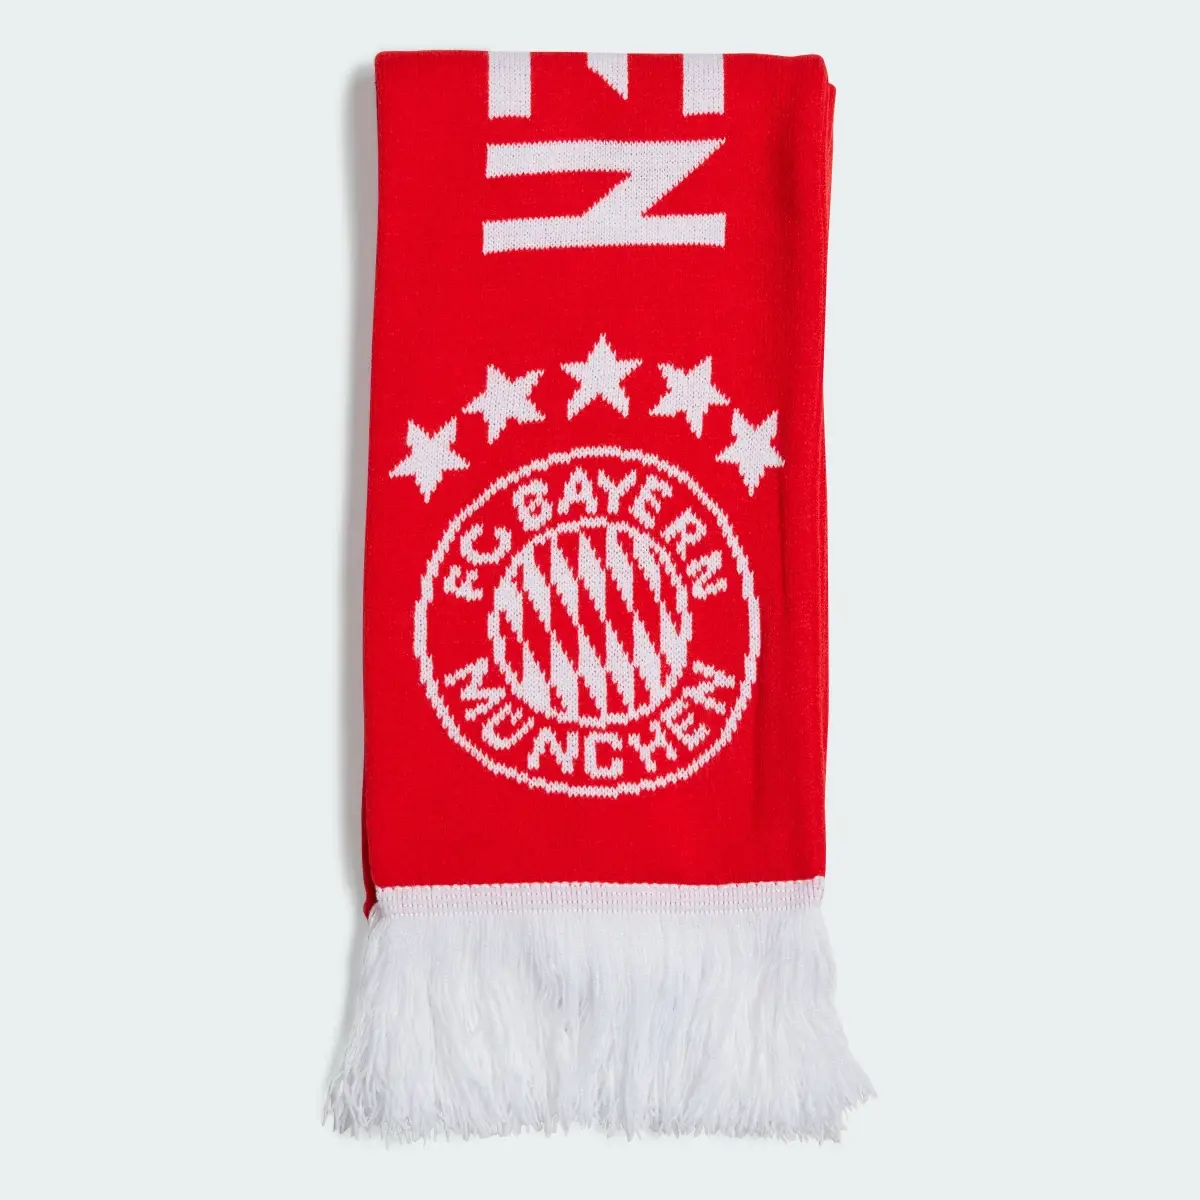 Adidas Cachecol do FC Bayern München. 2